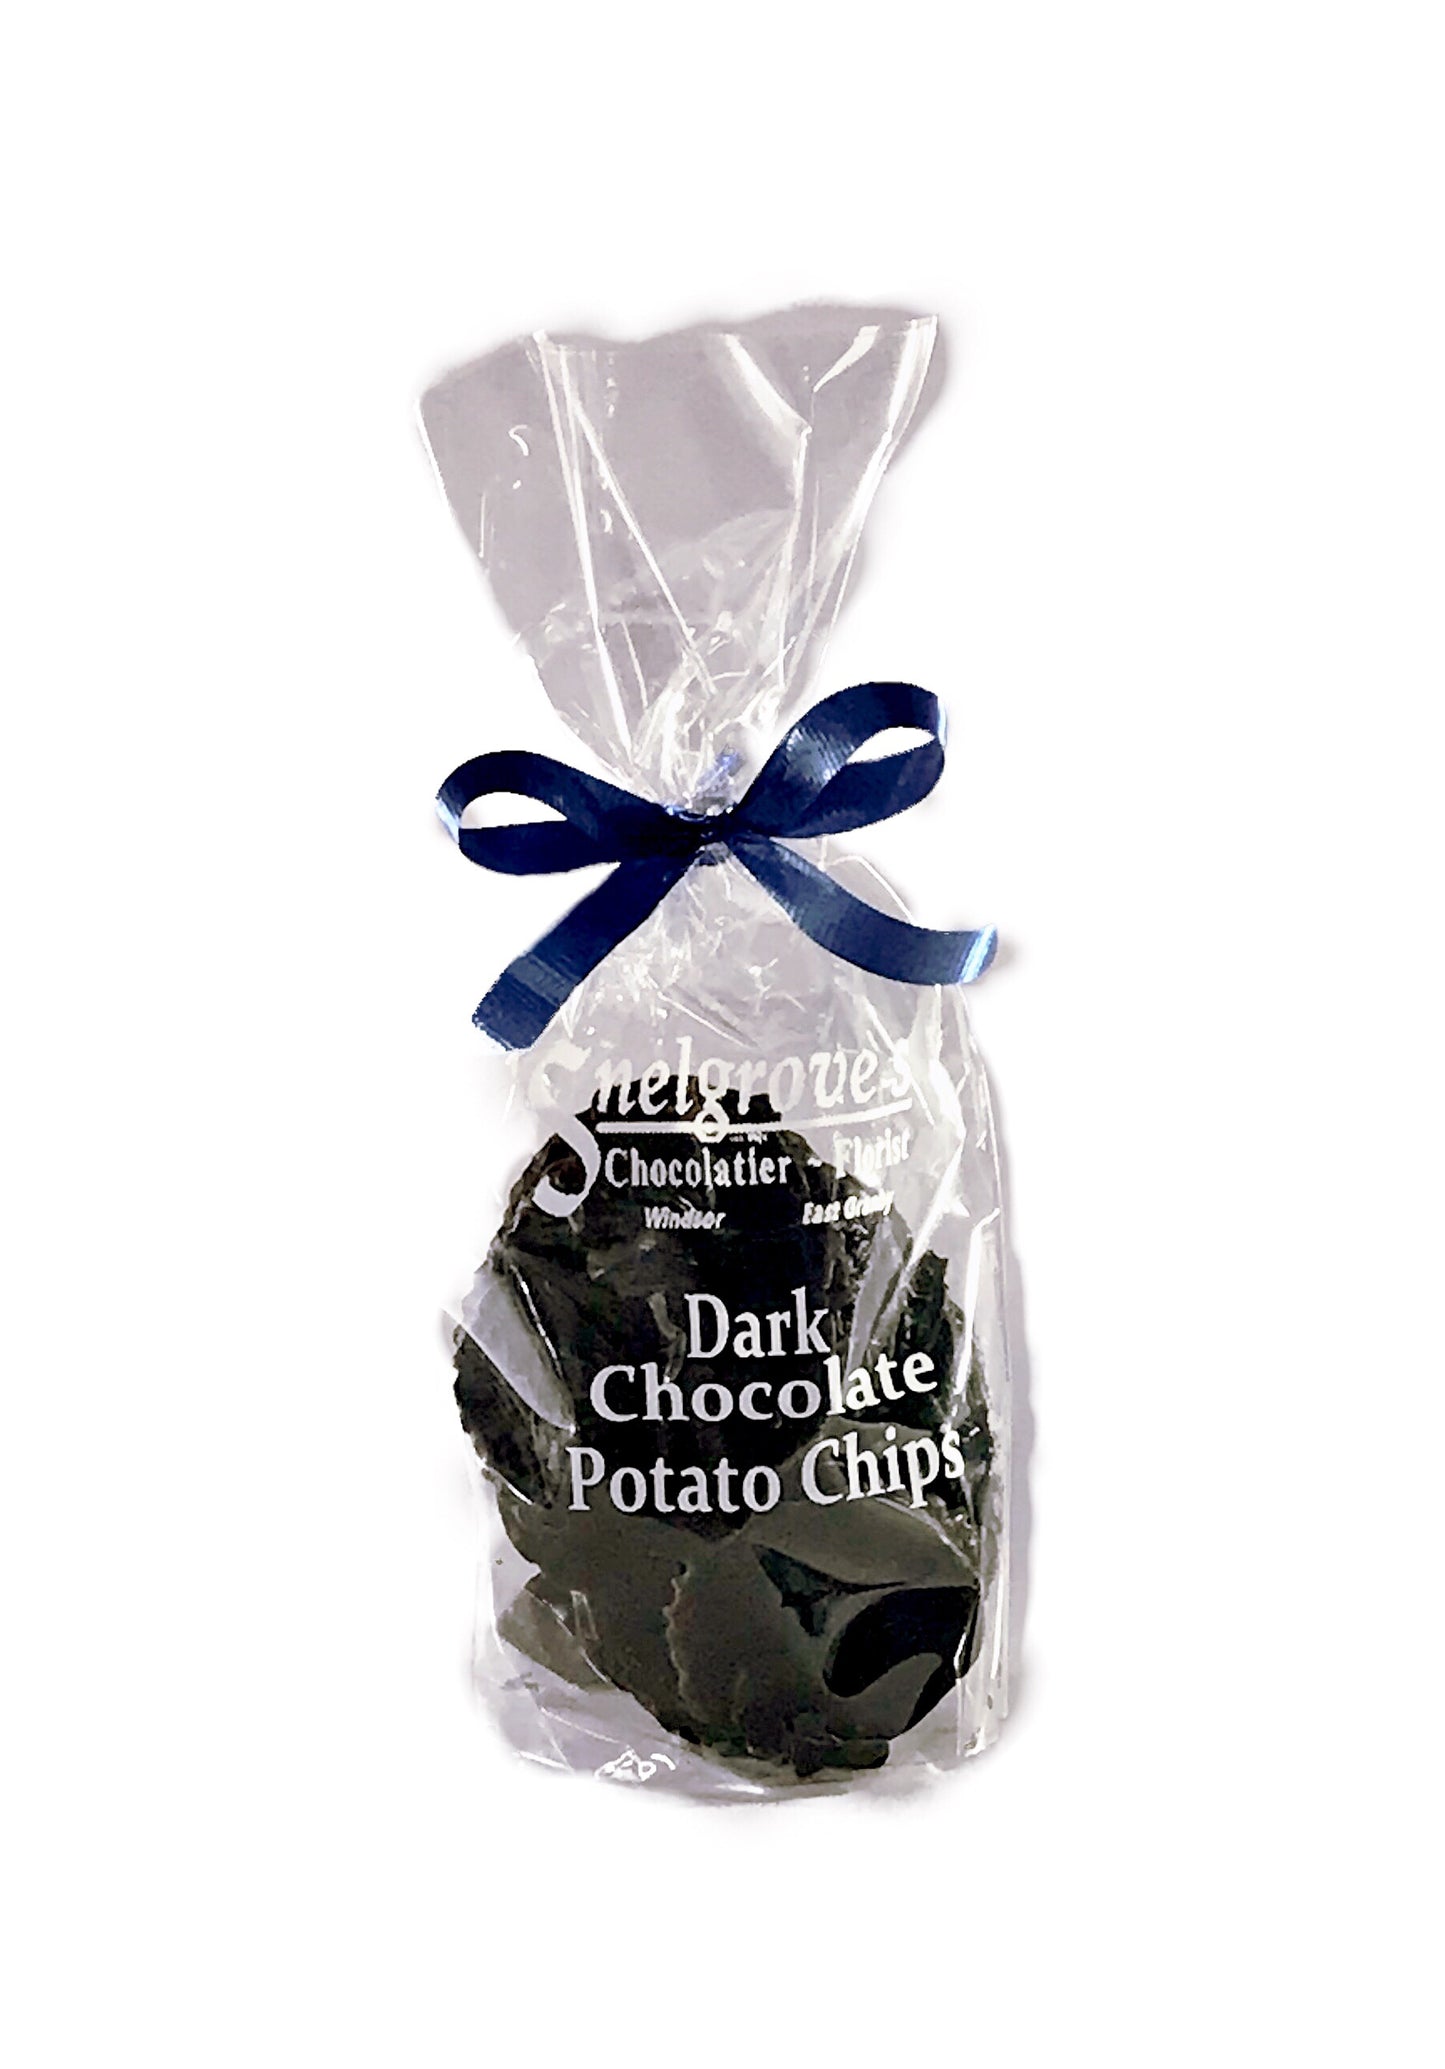 Bagged Dark Chocolate Covered Potato Chips